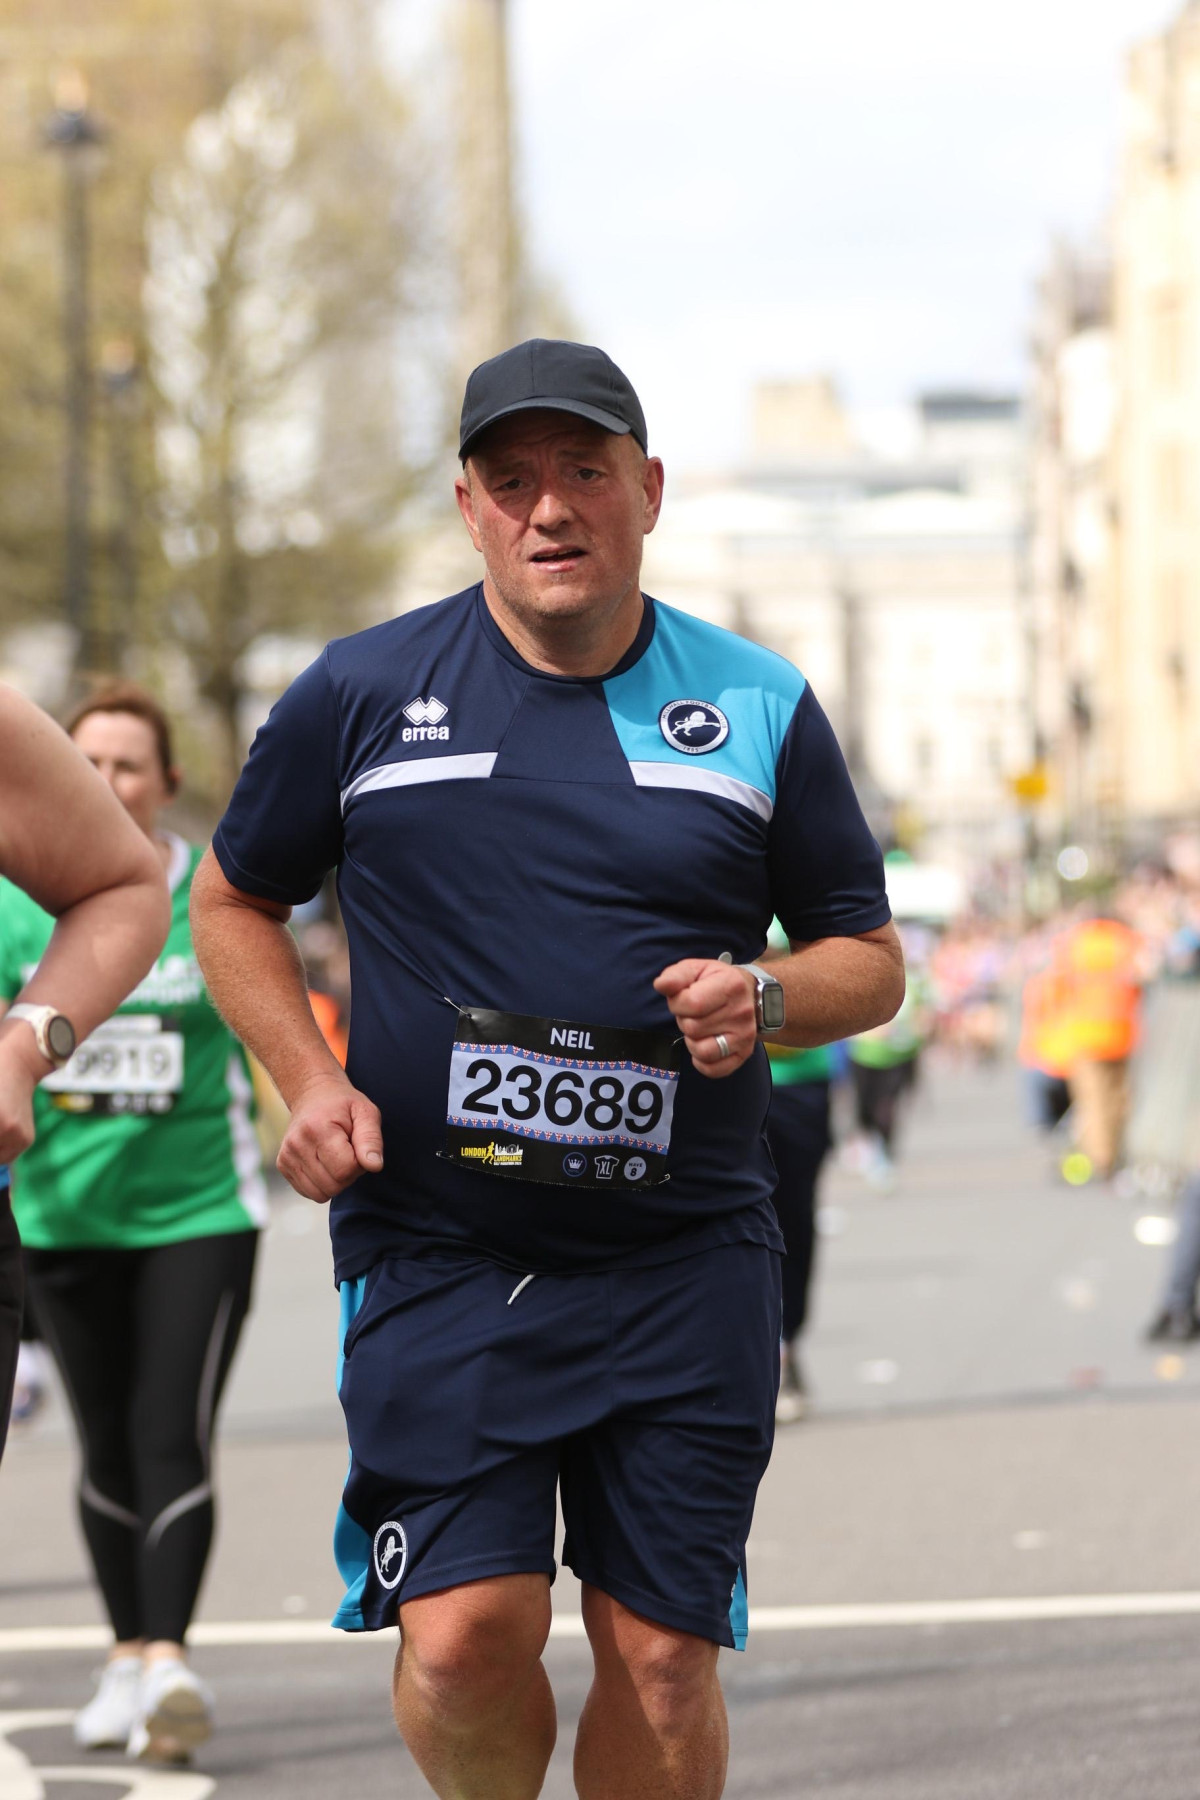 Four people ran the London Landmarks Half Marathon yesterday to raise money on behalf of the Millwall Community Trust